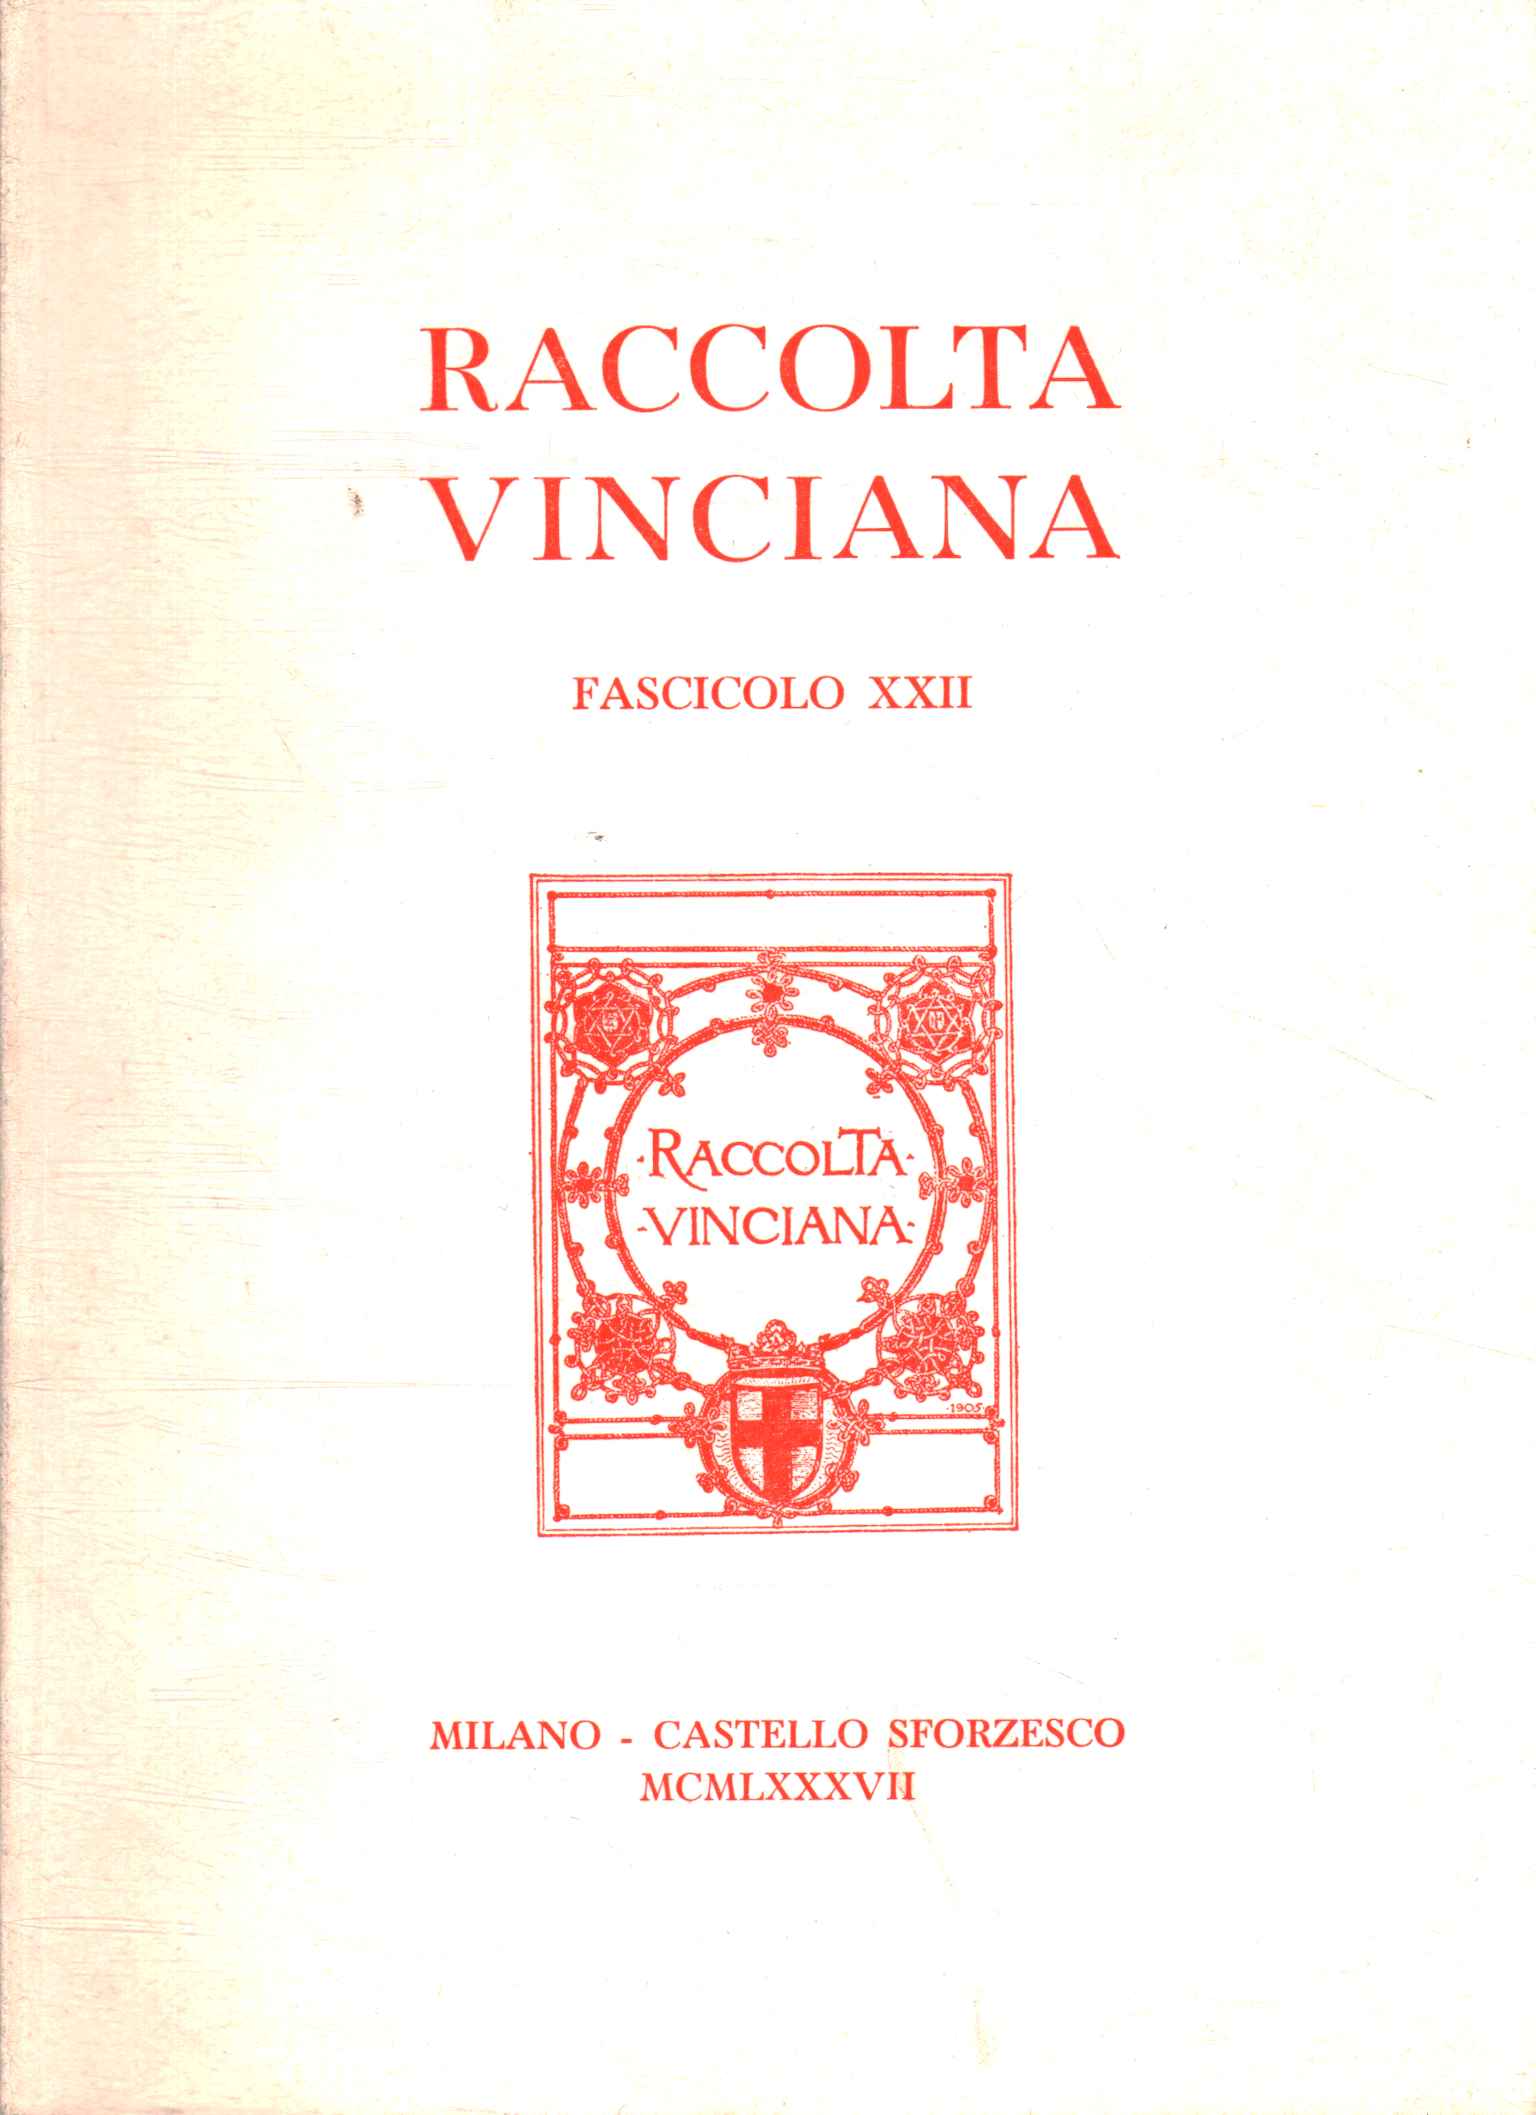 Vinciana Collection Ausgabe XXII, Vinciana Collection Ausgabe XXII, Vinciana Collection Ausgabe XXII, Vinciana Collection Ausgabe XXII